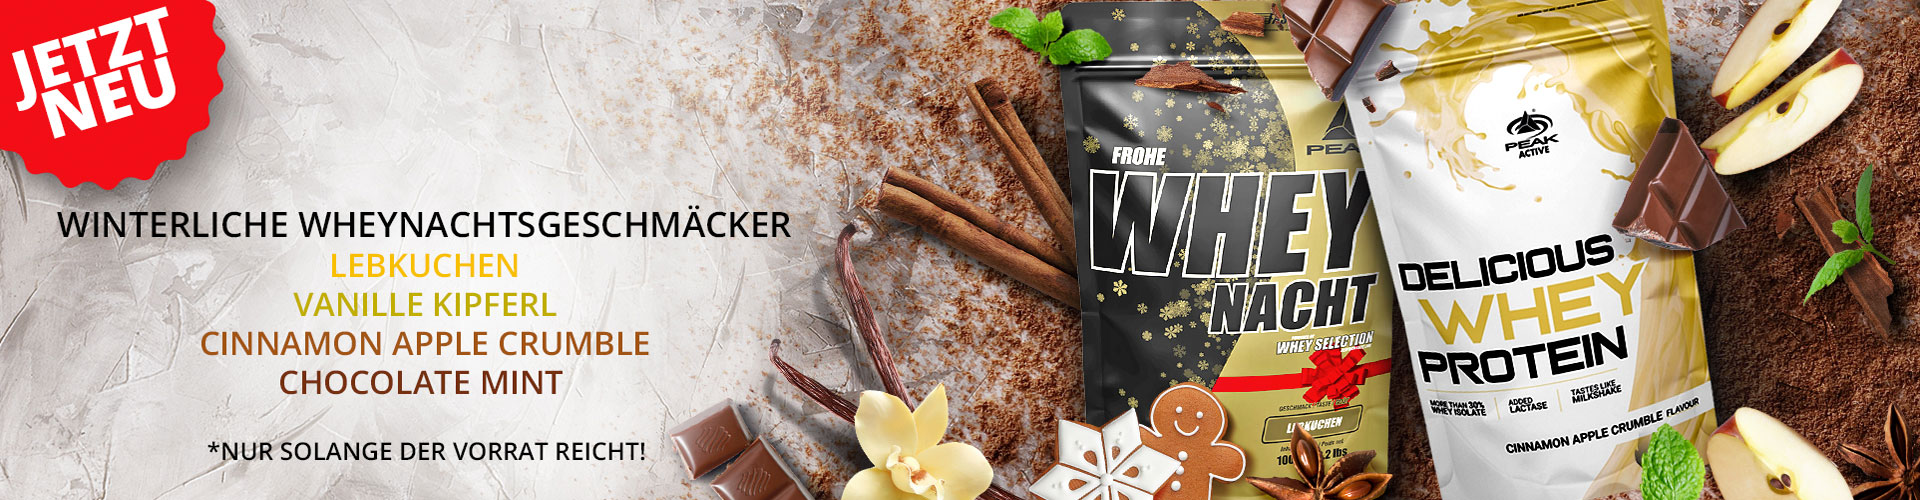 Winterliche Geschmäcker Delicious Whey & Wheynacht Selection